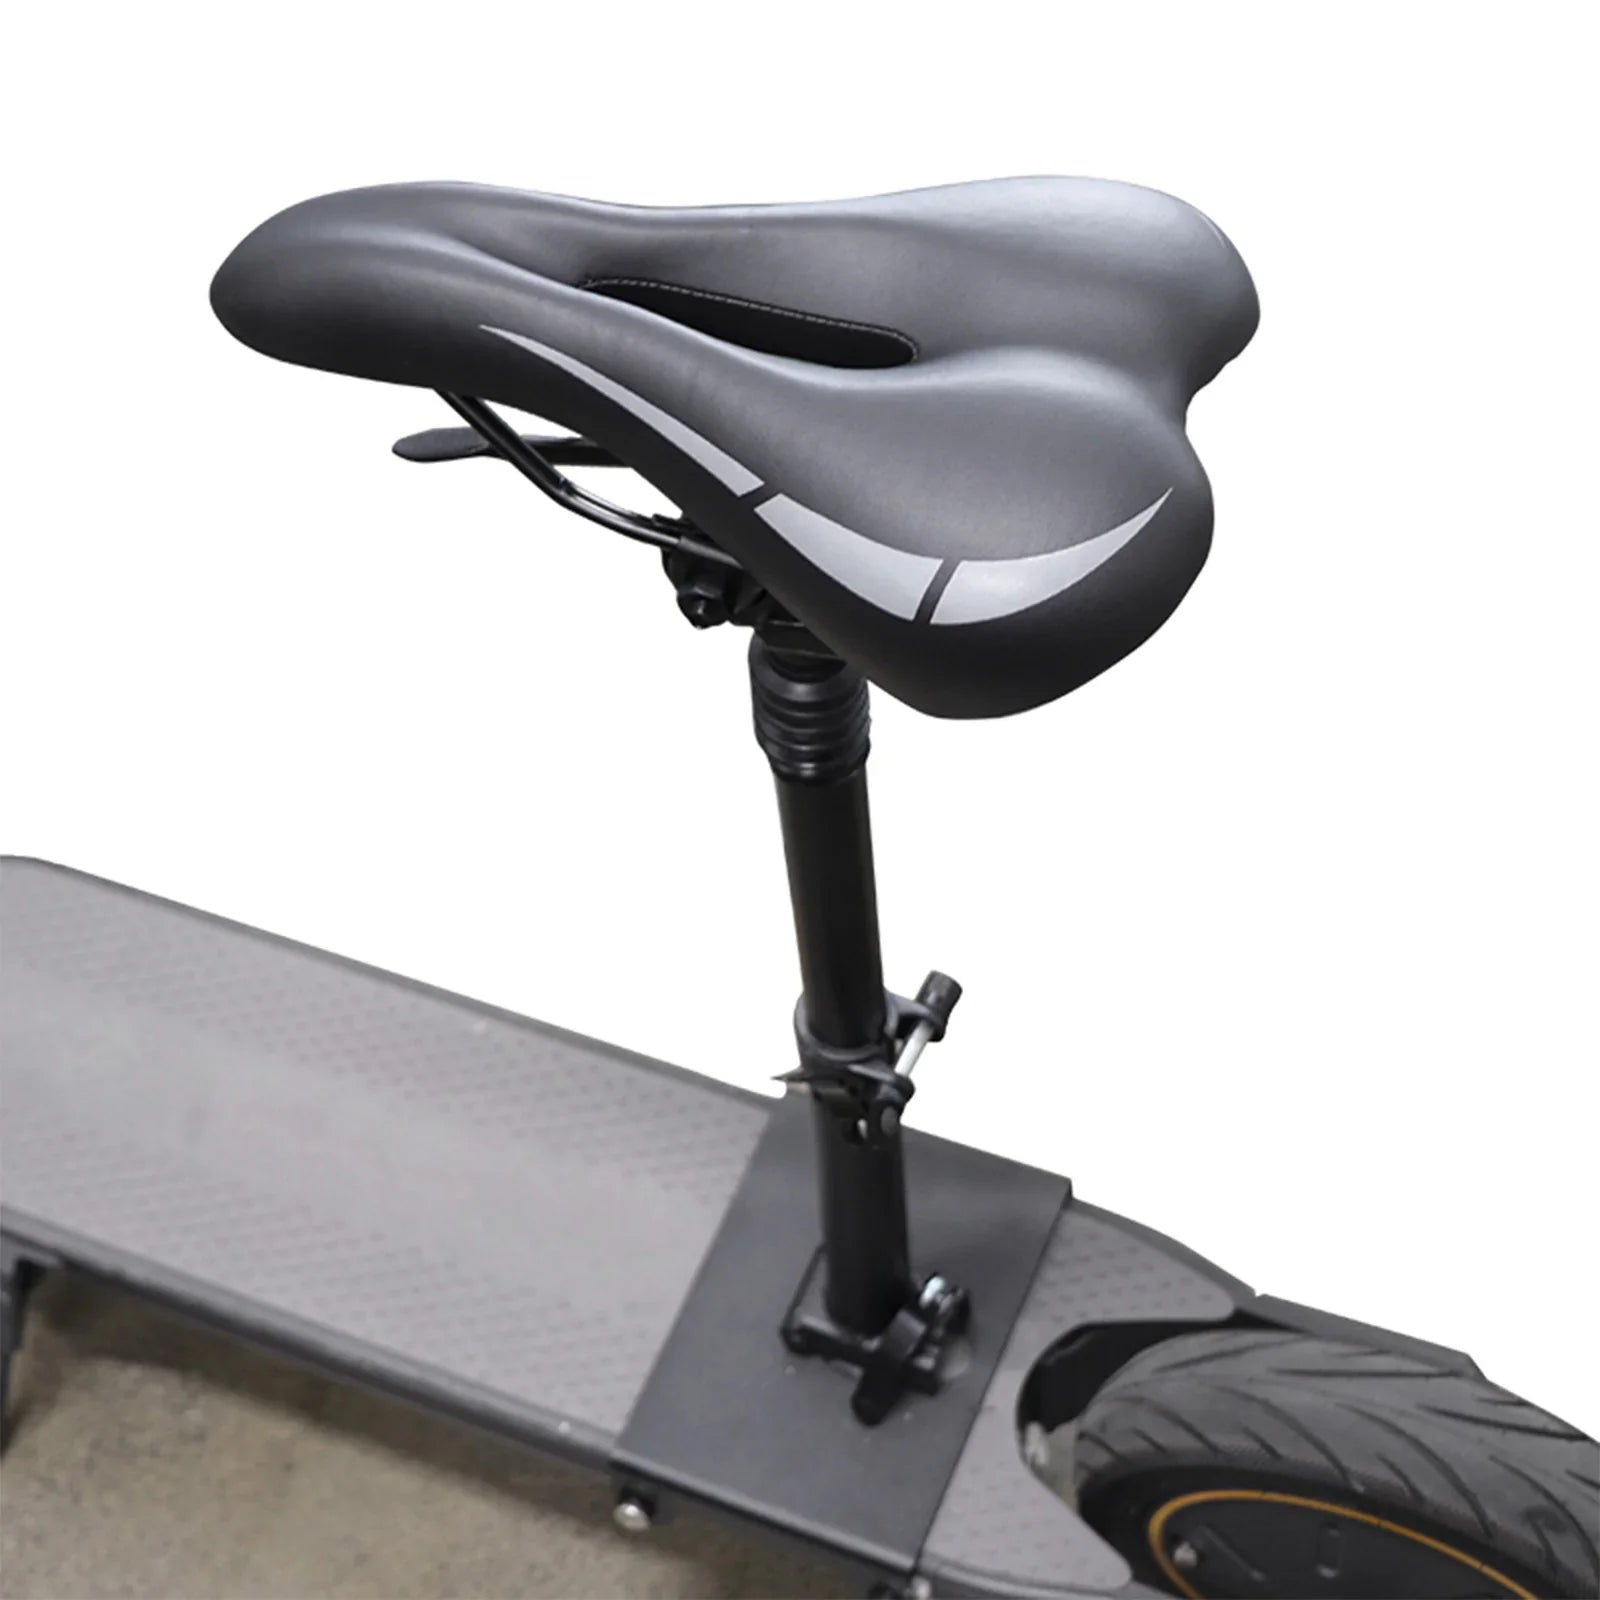 Asiento de patinete eléctrico plegable, asiento de monopatín ajustable para NINEBOT G30 MAX